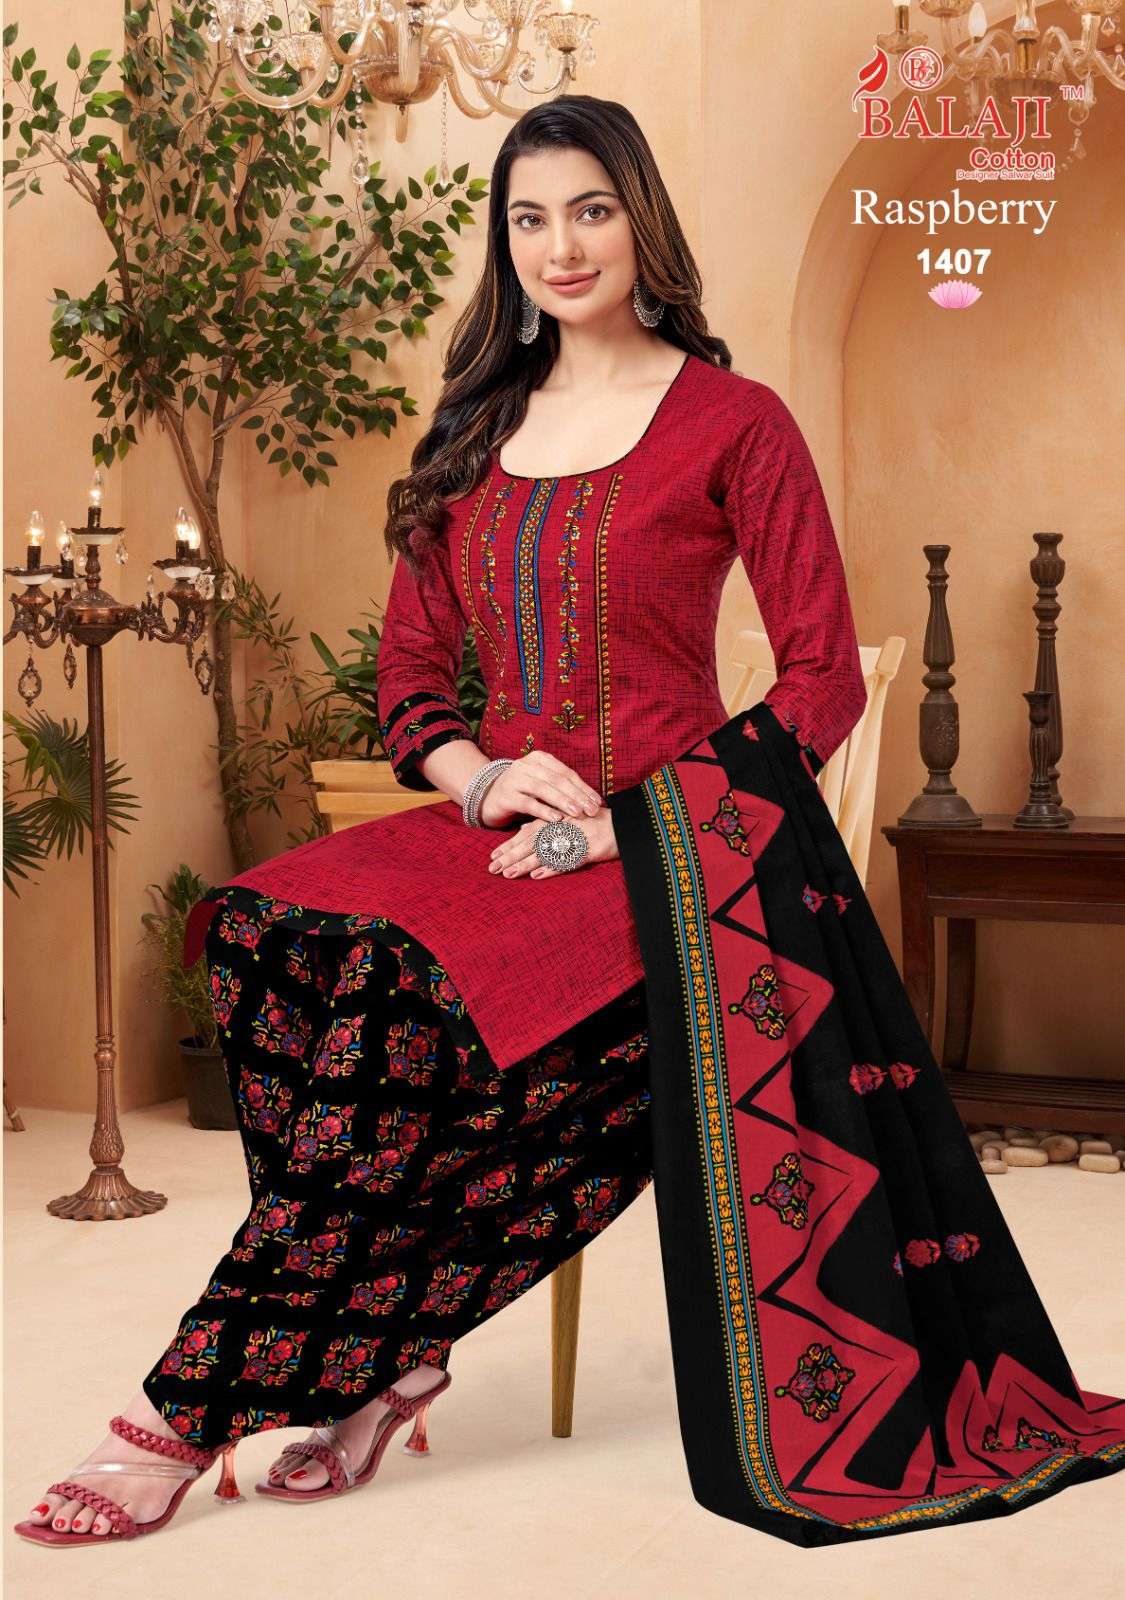 balaji cotton raspberry vol-14 1401-1412 series latest designer cotton salwar kameez wholesaler surat gujarat